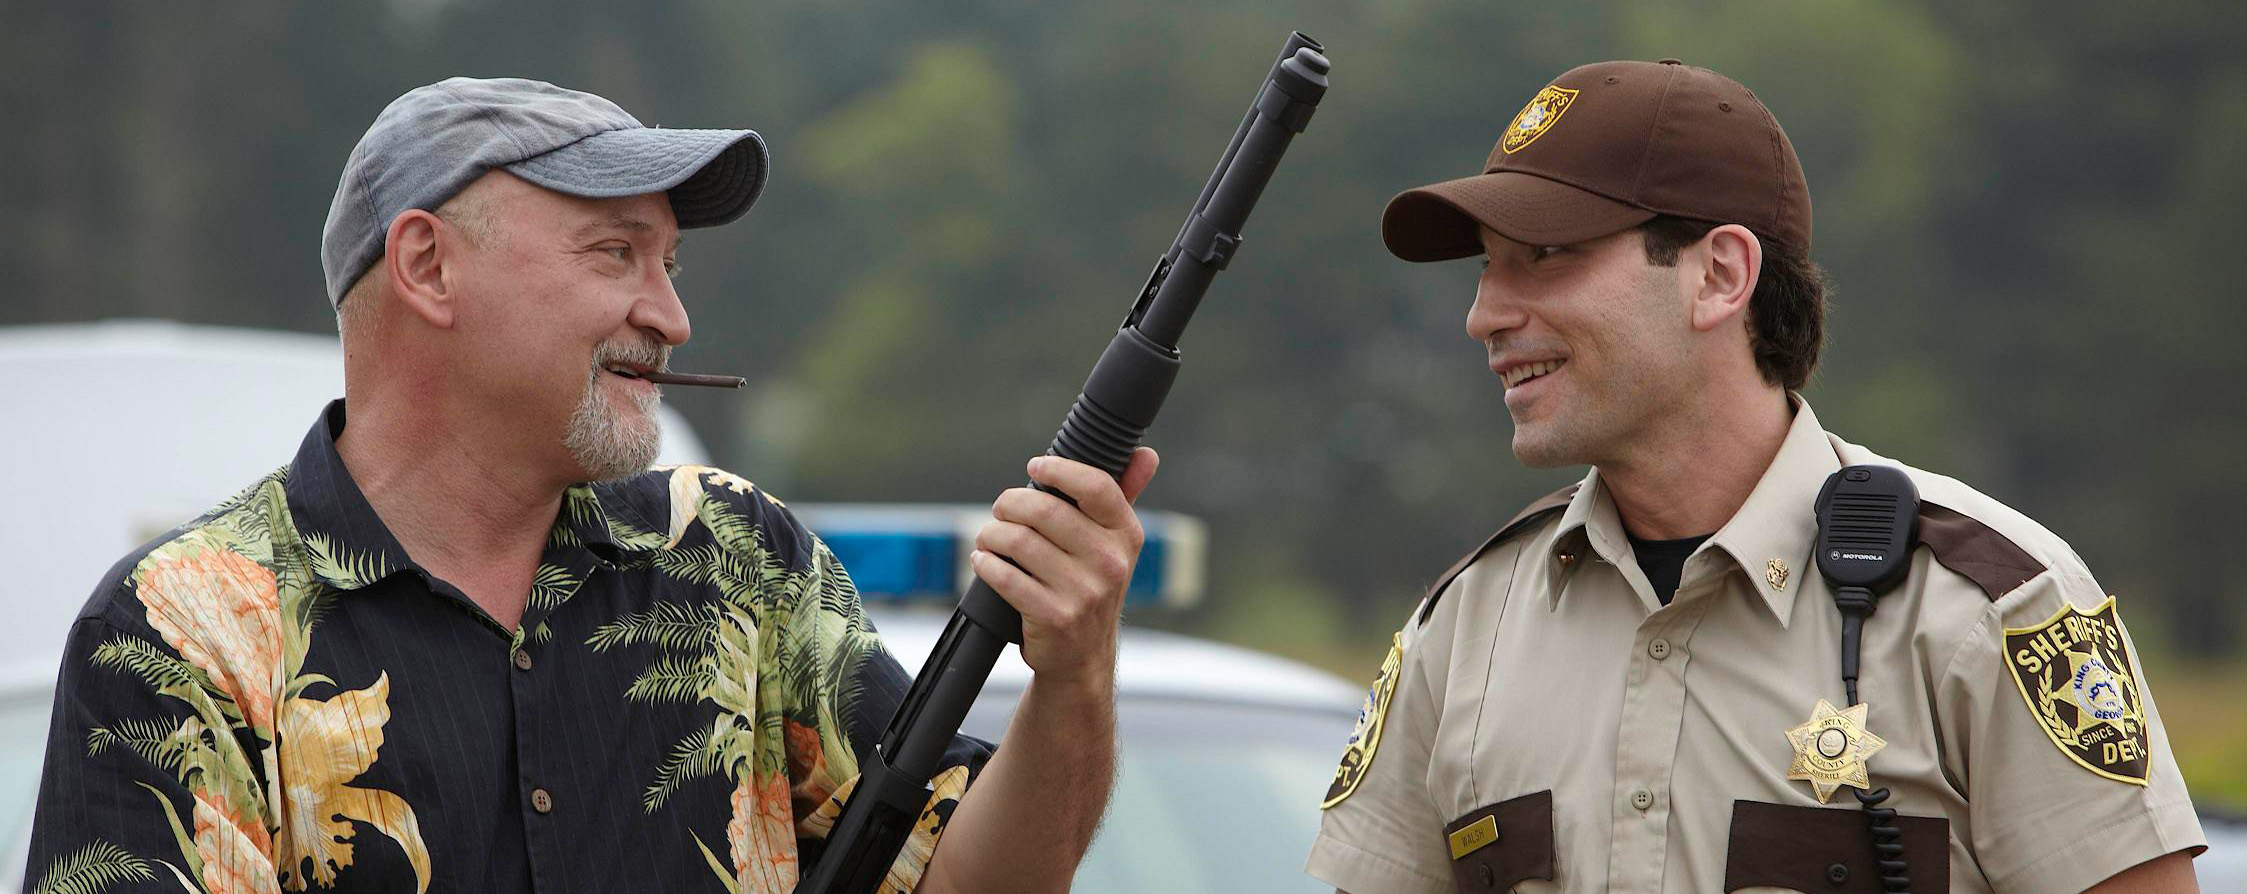 Frank Darabont quebra seu silêncio sobre The Walking Dead